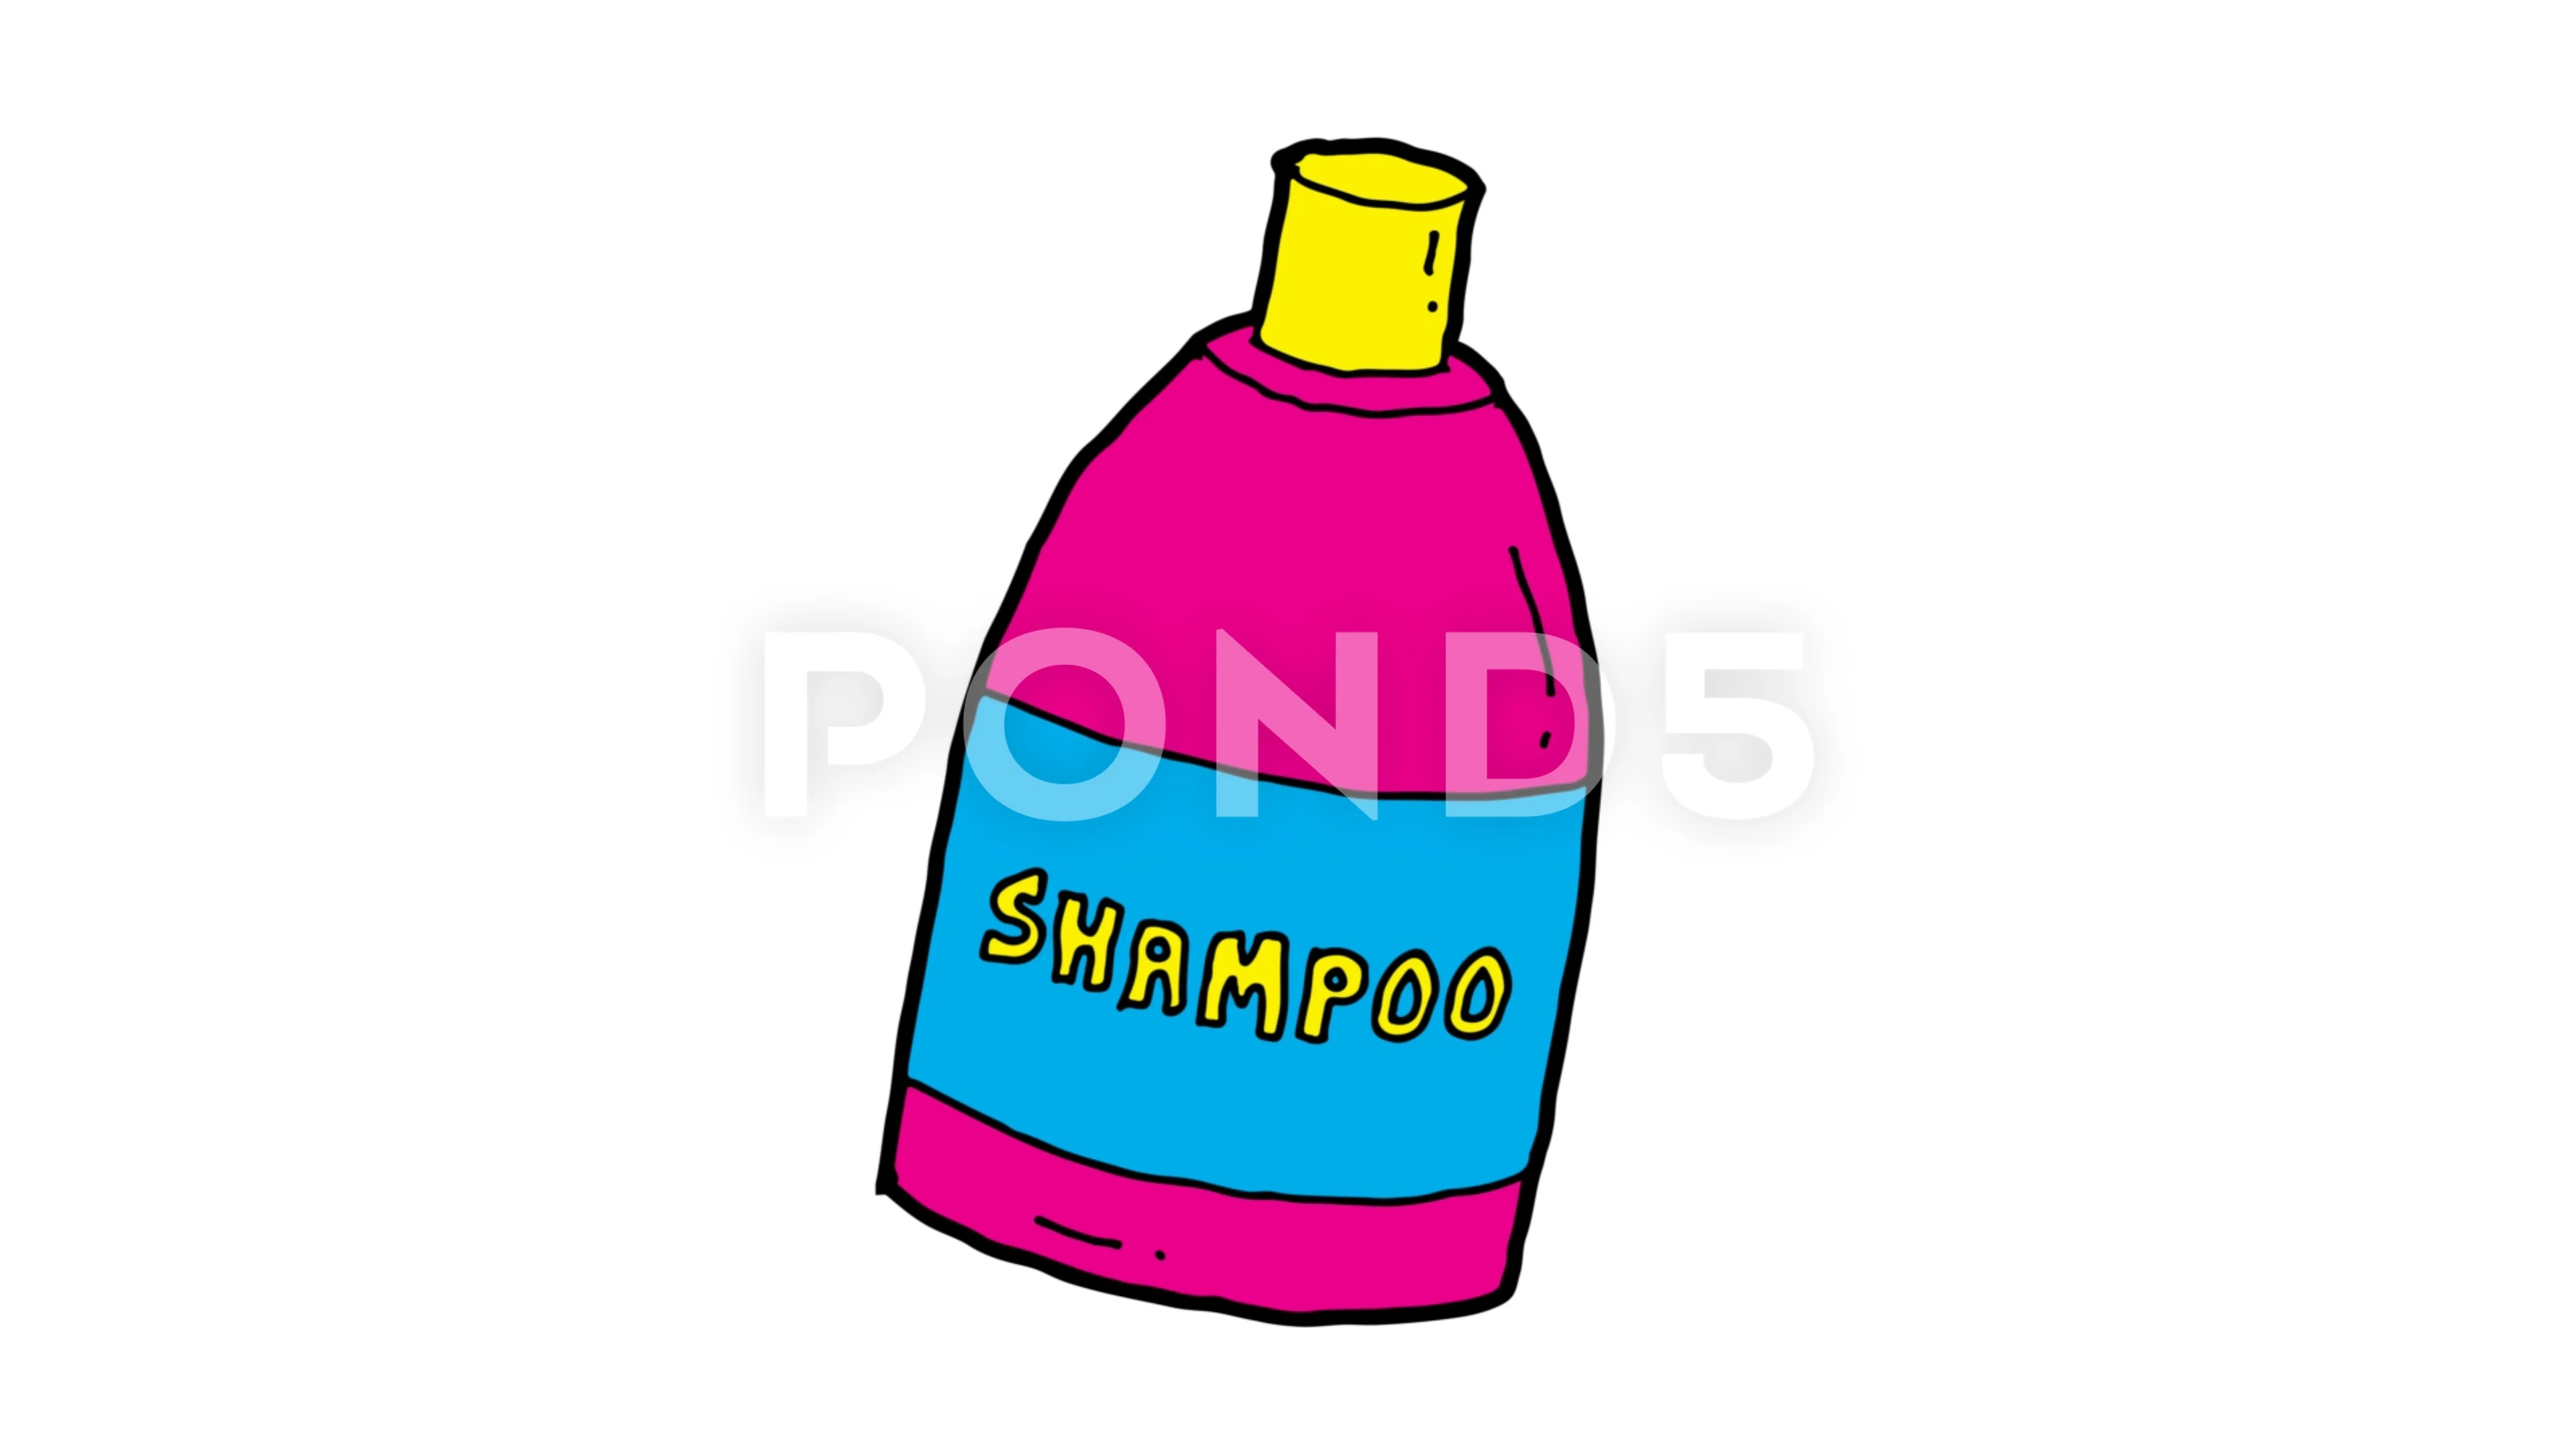 Shampoo bottle isolated | Stock vector | Colourbox